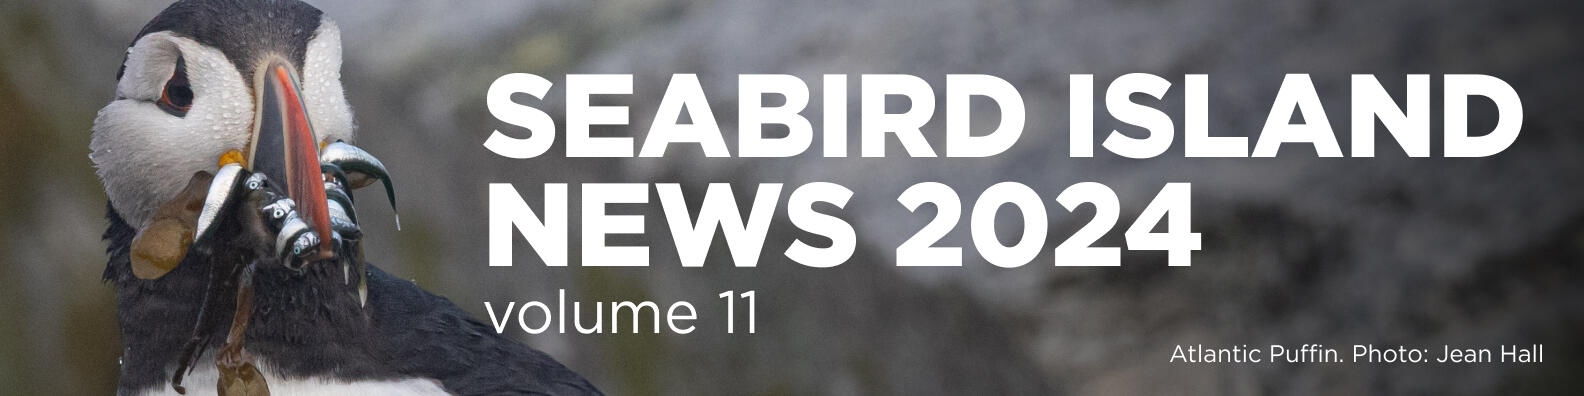 Seabird Island News Banner - Volume 11